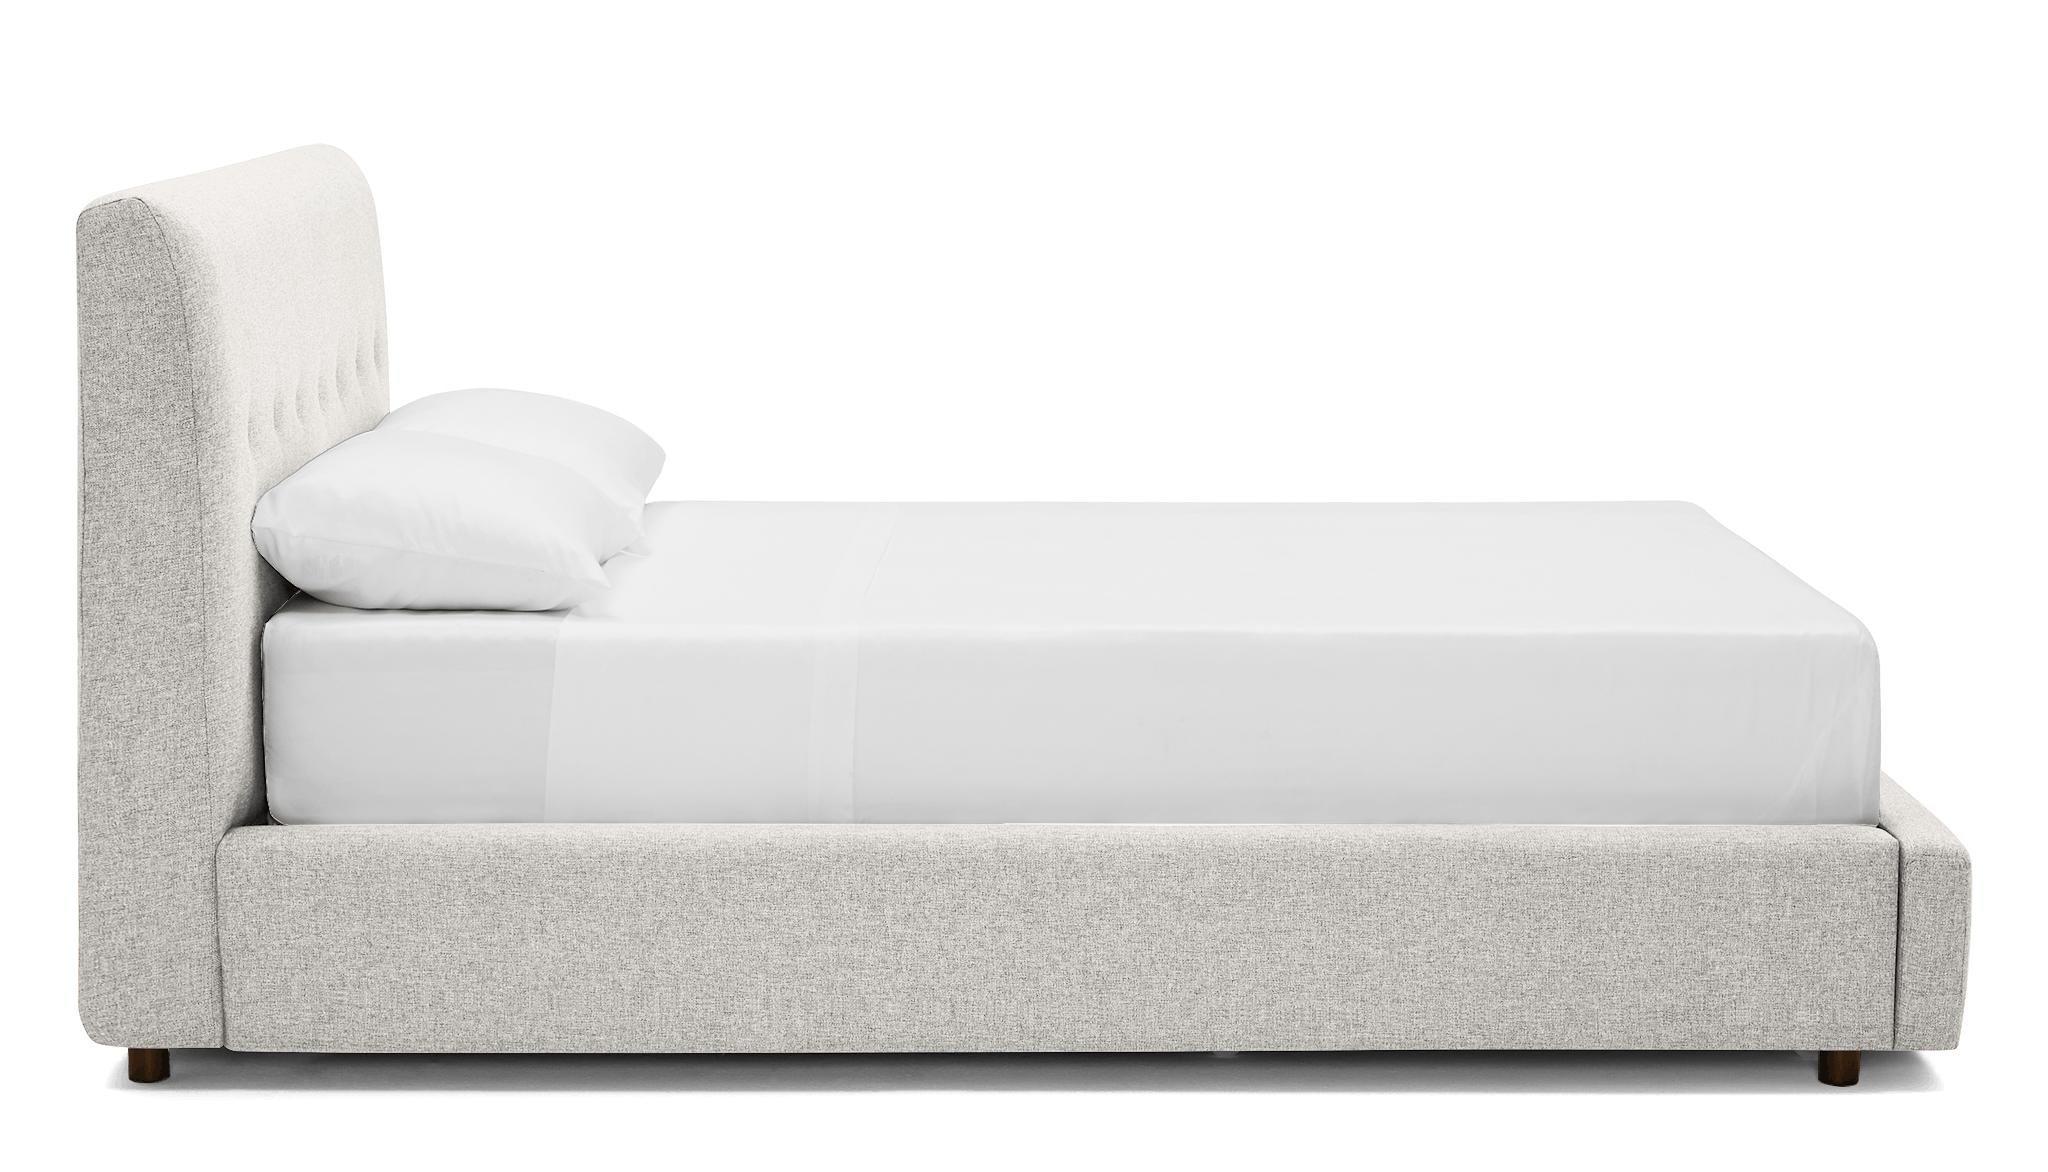 White Alvin Mid Century Modern Storage Bed - Tussah Snow - Mocha - Eastern King - Image 2